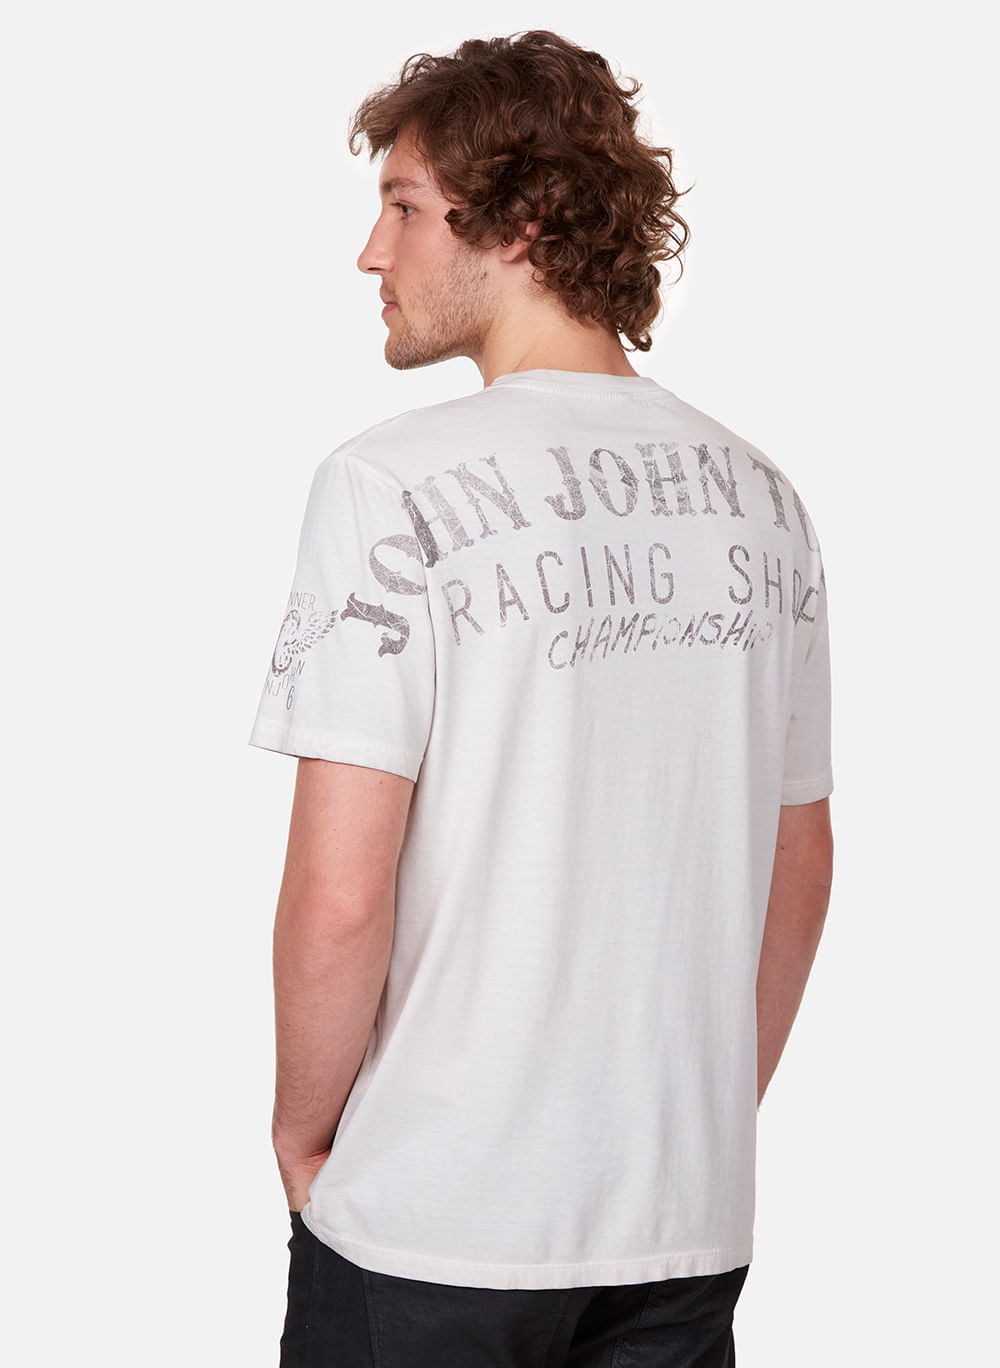 Camiseta John John Flame Transfer - Alcateia Moda Masculina